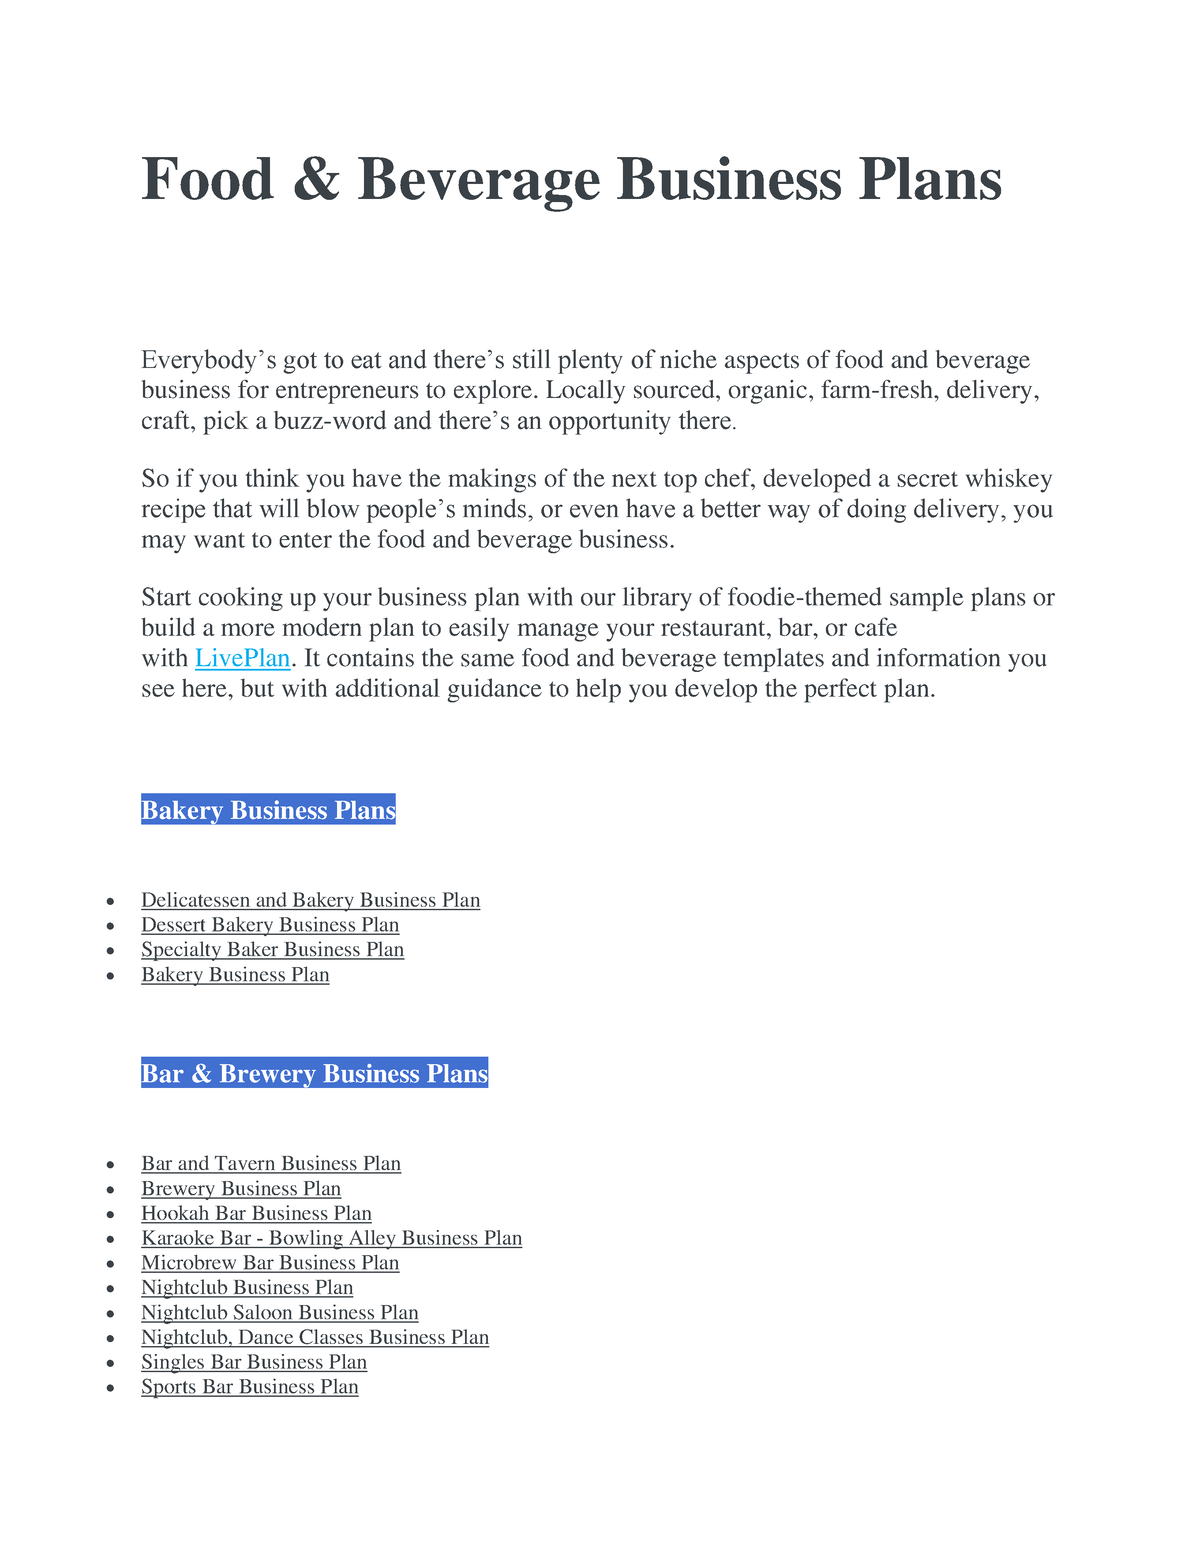 soft drink business plan sample